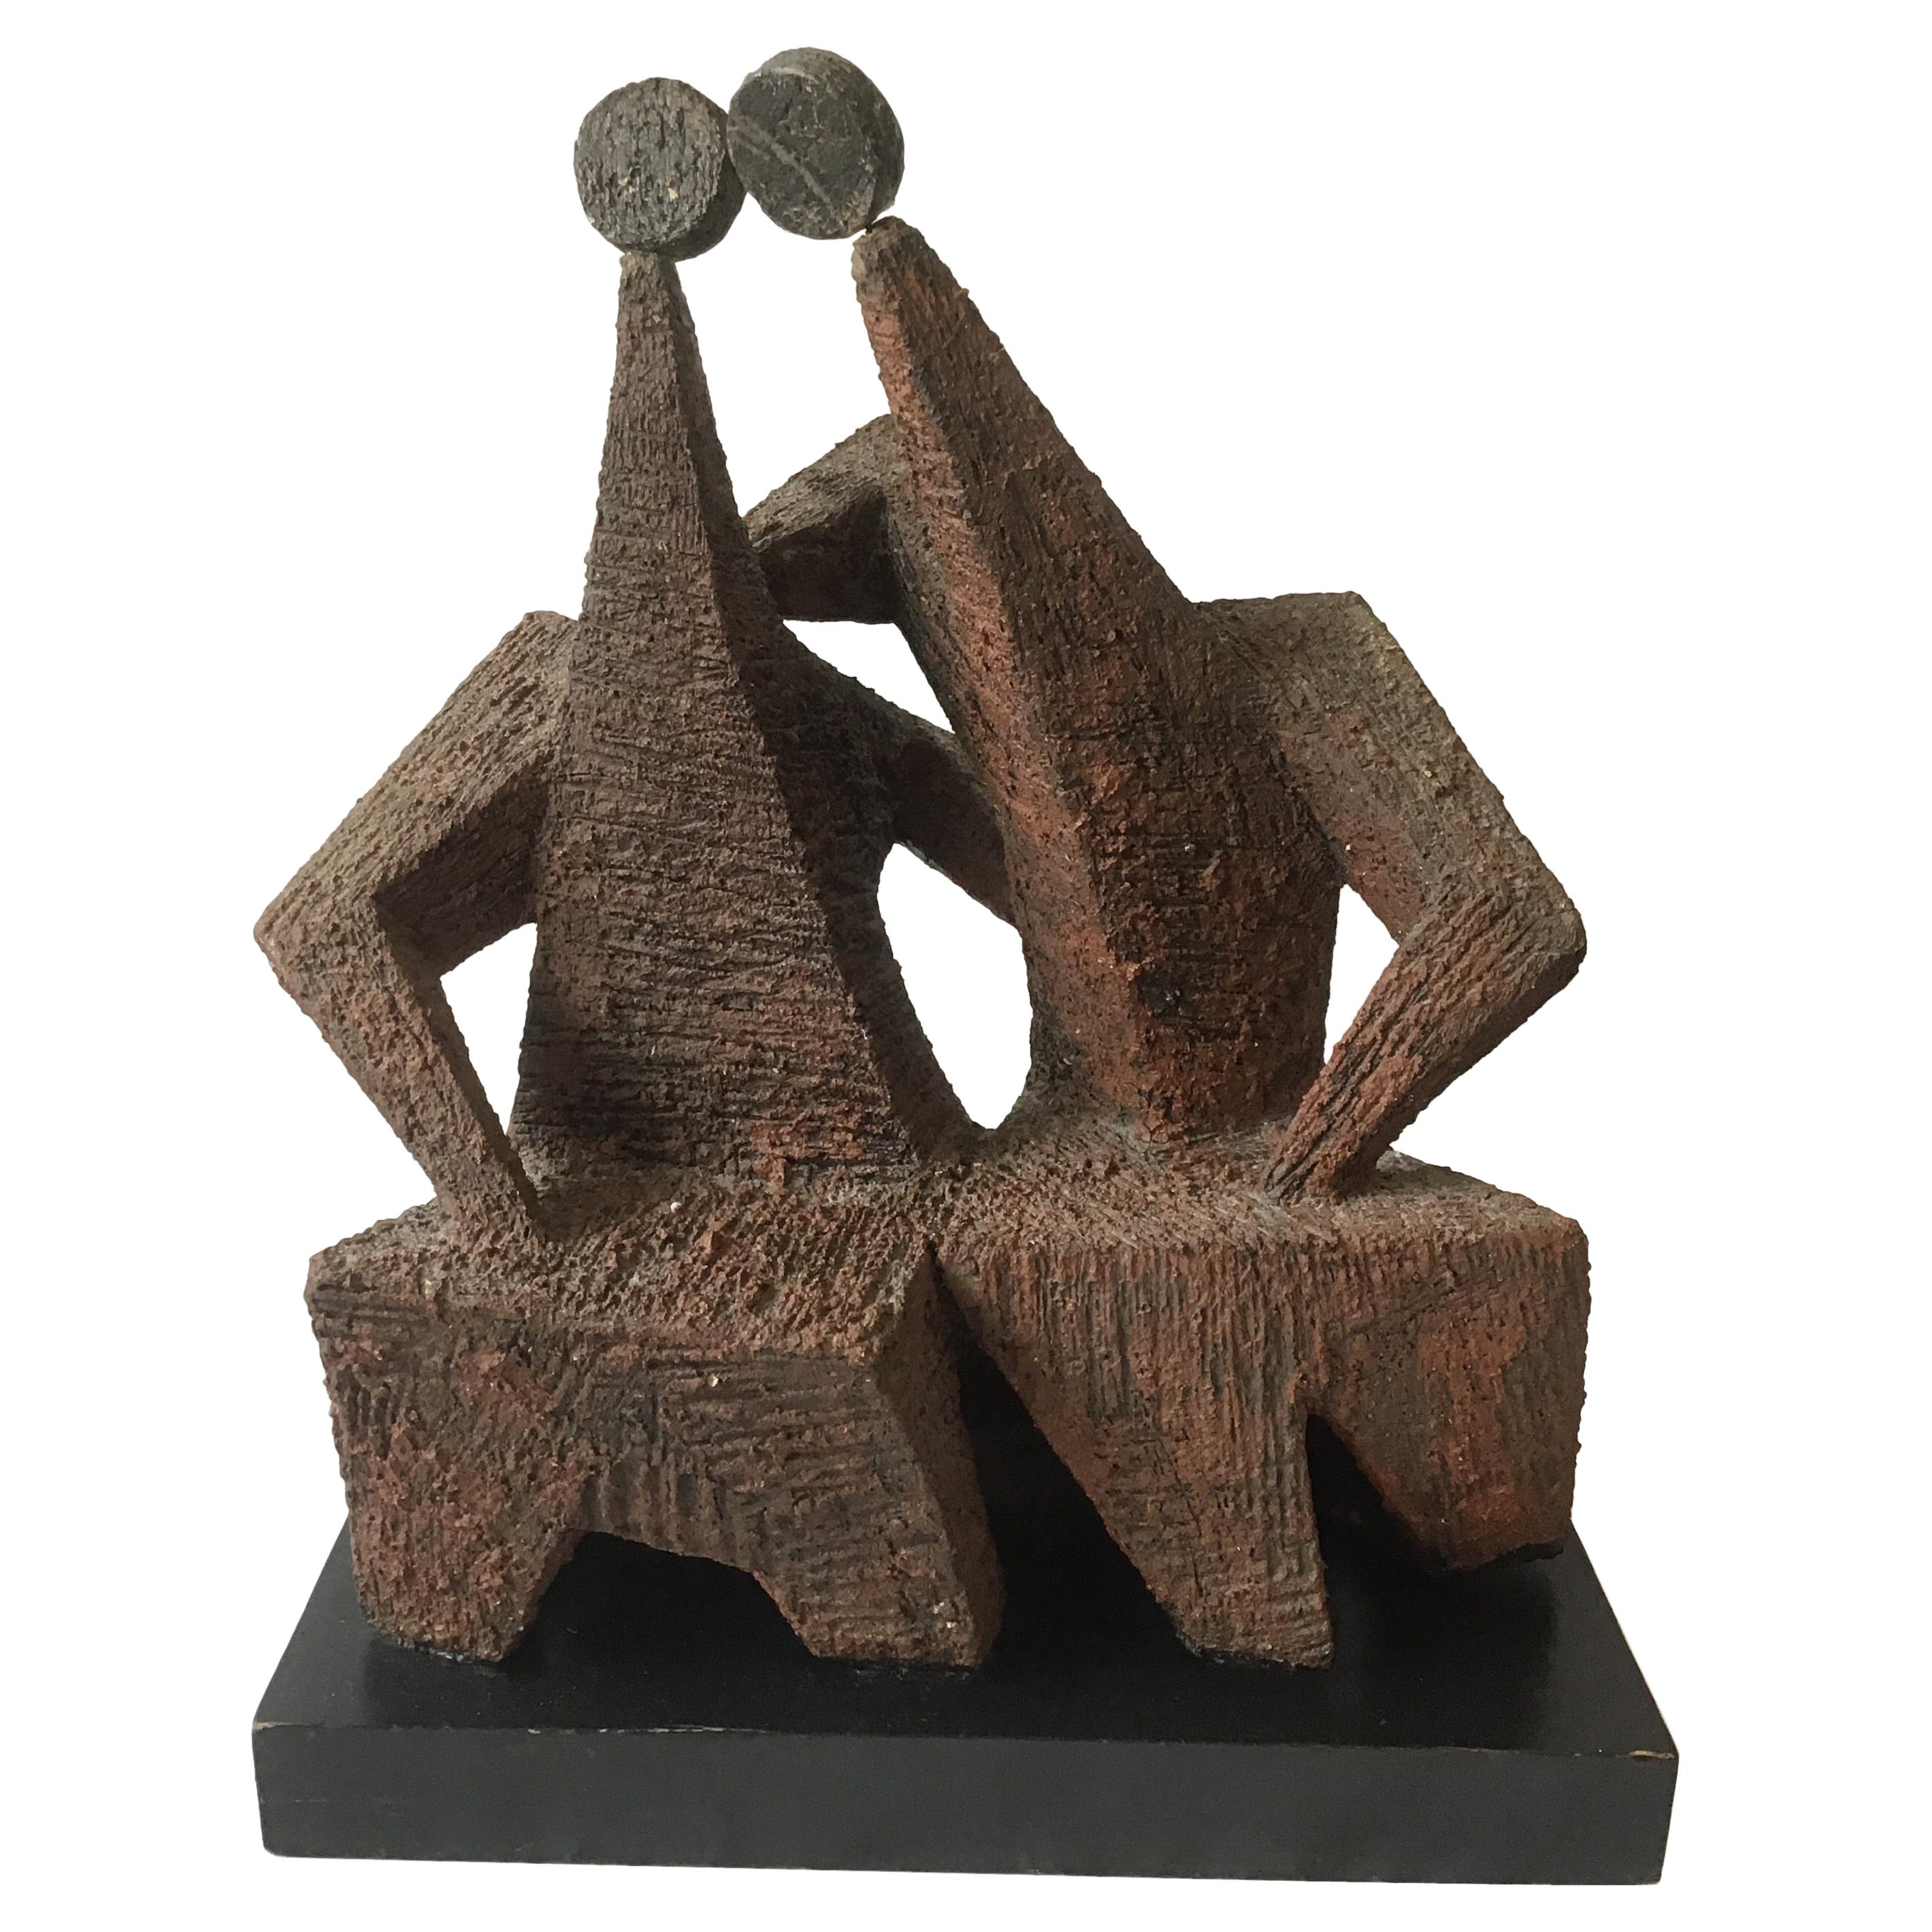 1950s Brutalist Sculpture of Two Men by Margot Kempe